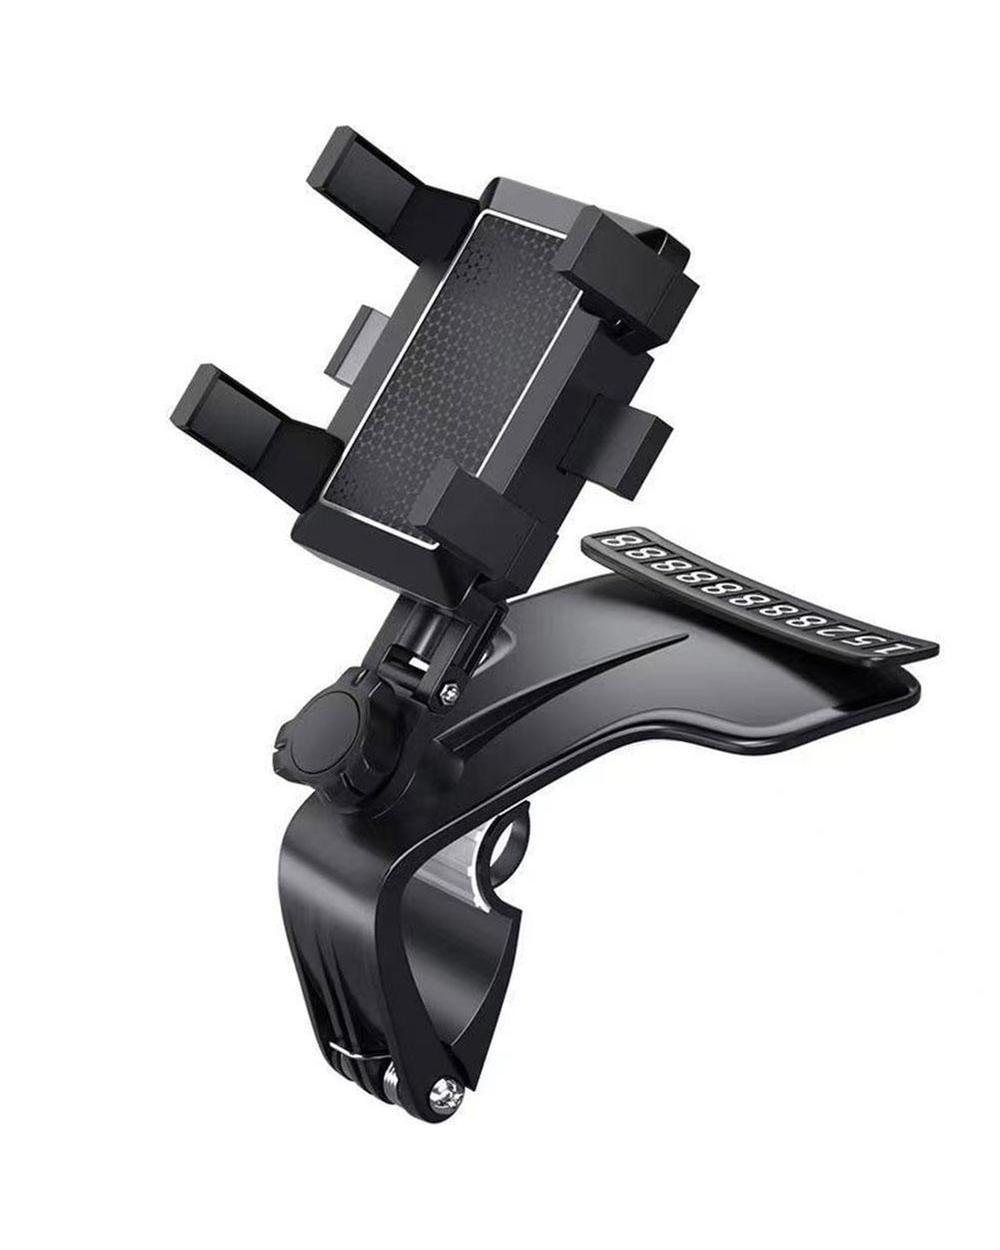 Hugoiio™ 1200 Degree Rotation Universal Car Dashboard Phone Holder